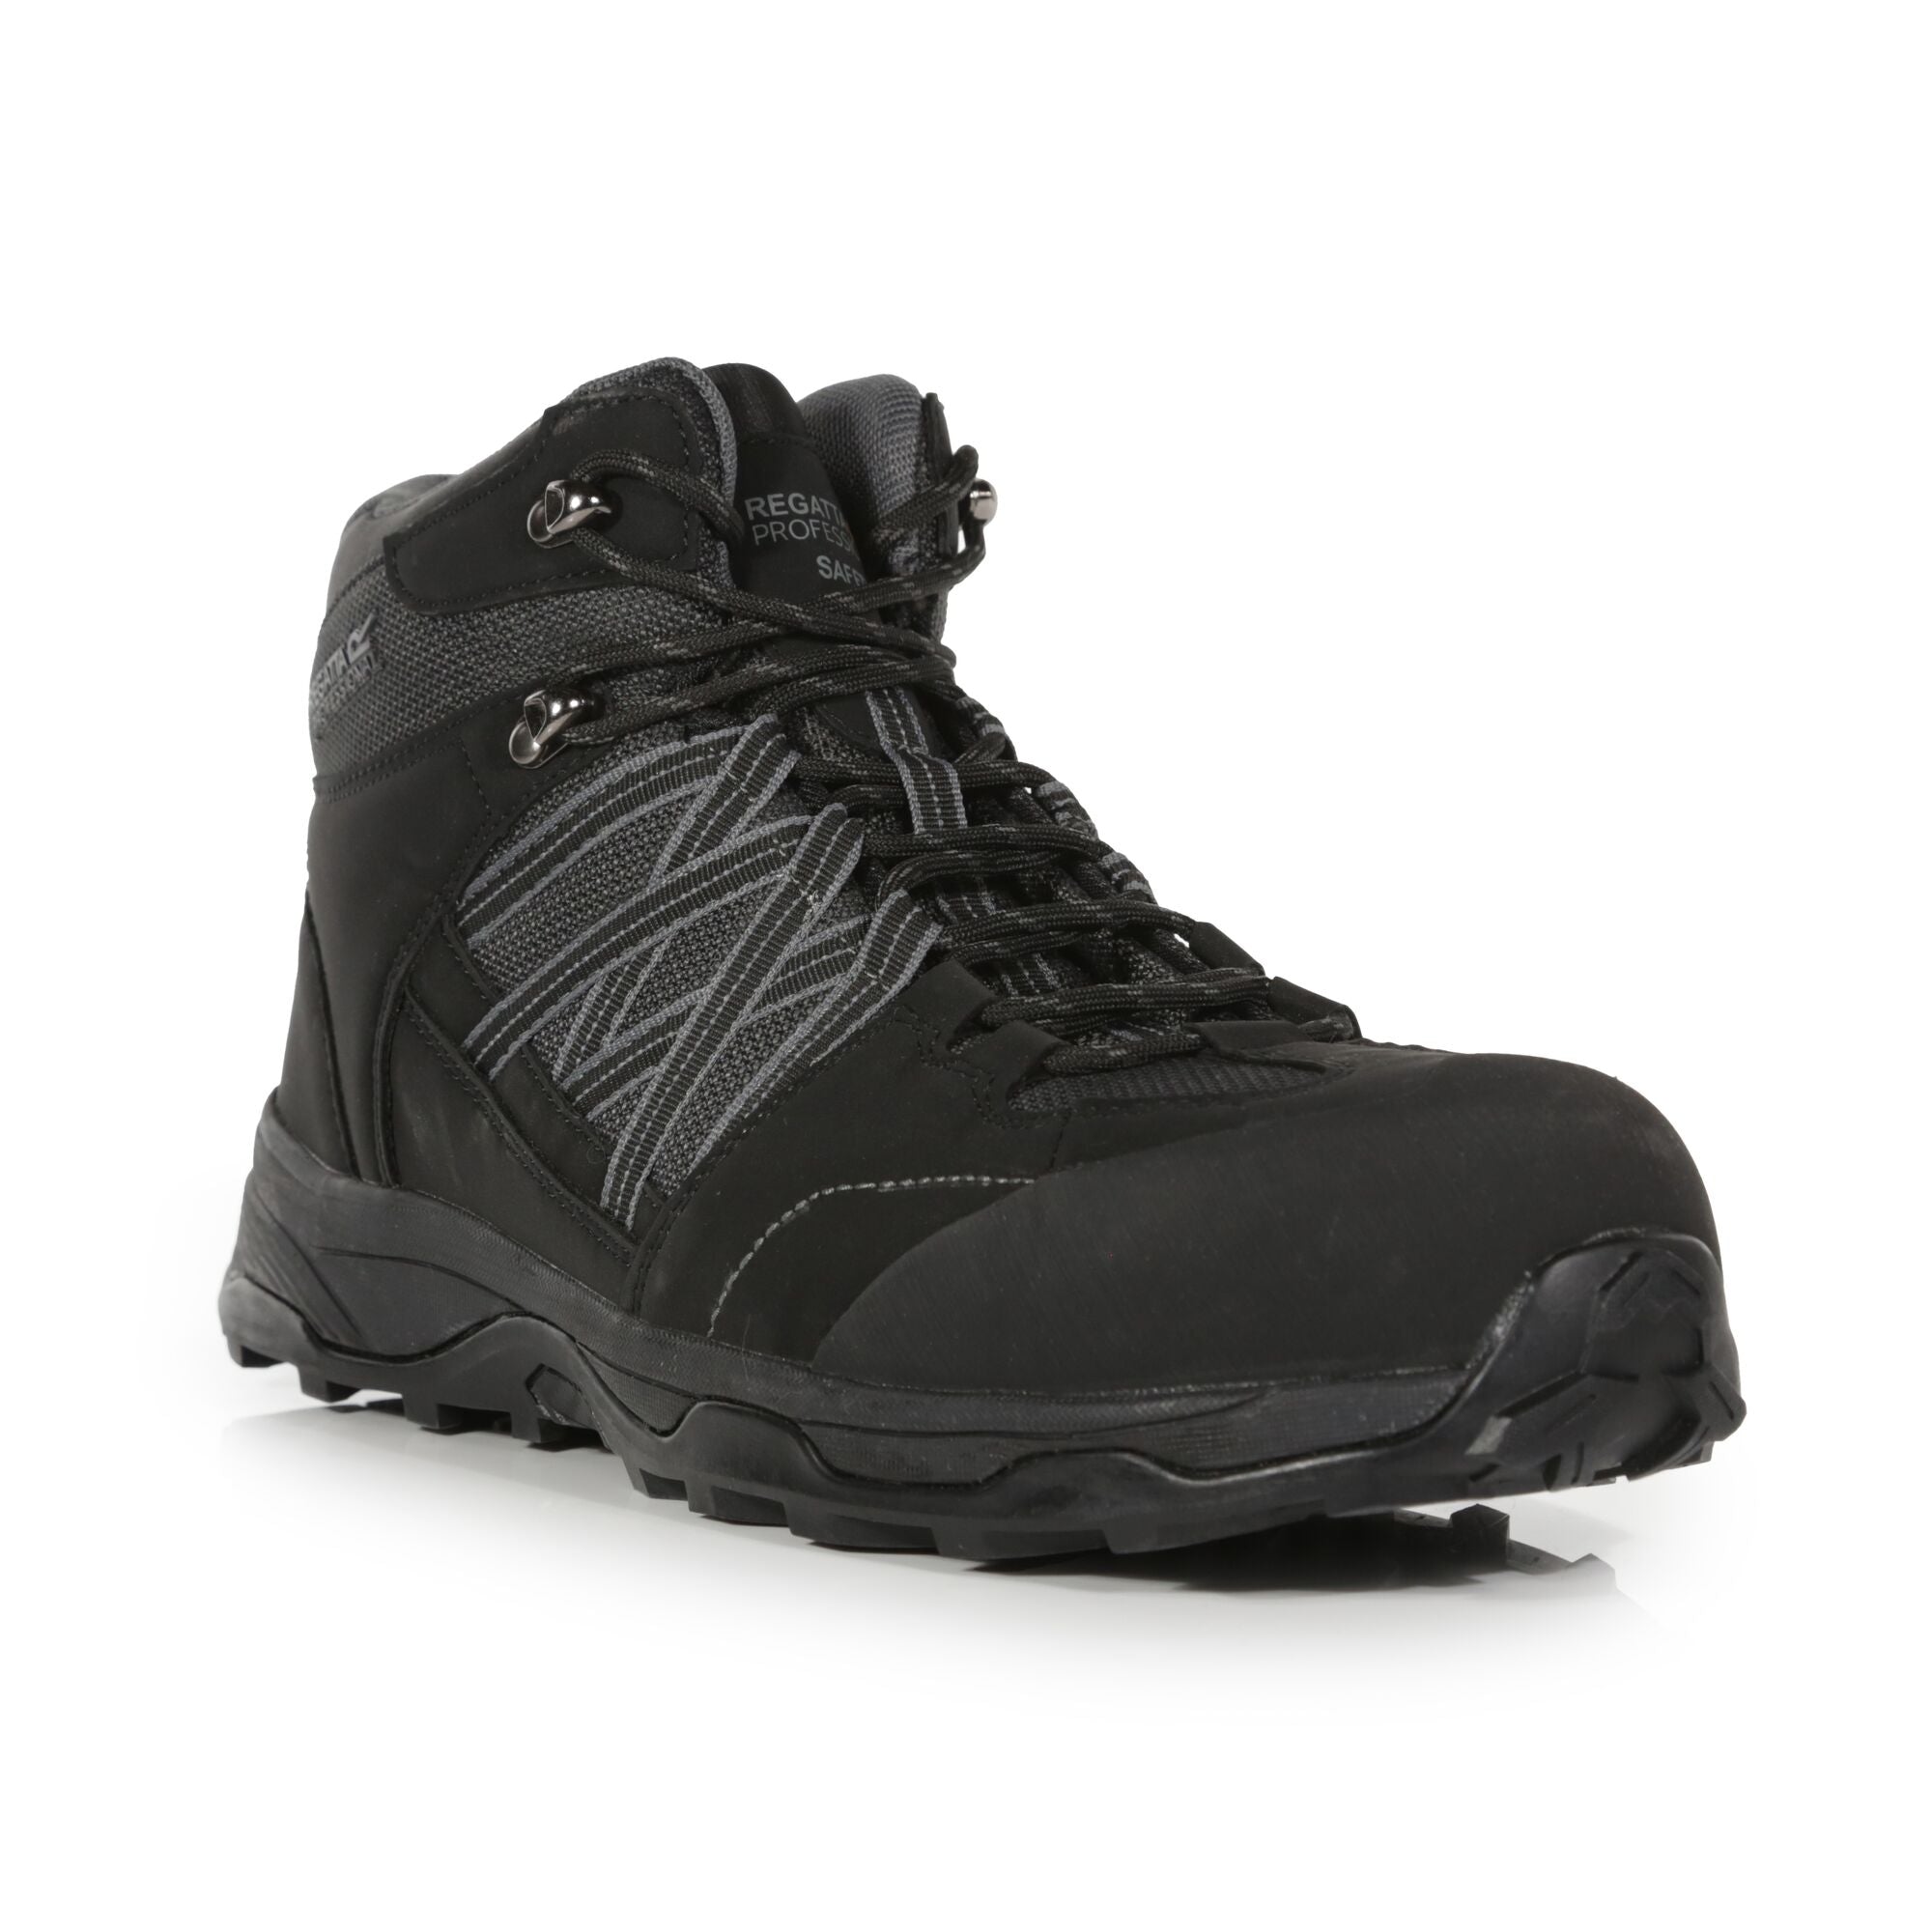 Regatta Claystone S3 Hiker Boots - Black/Granite